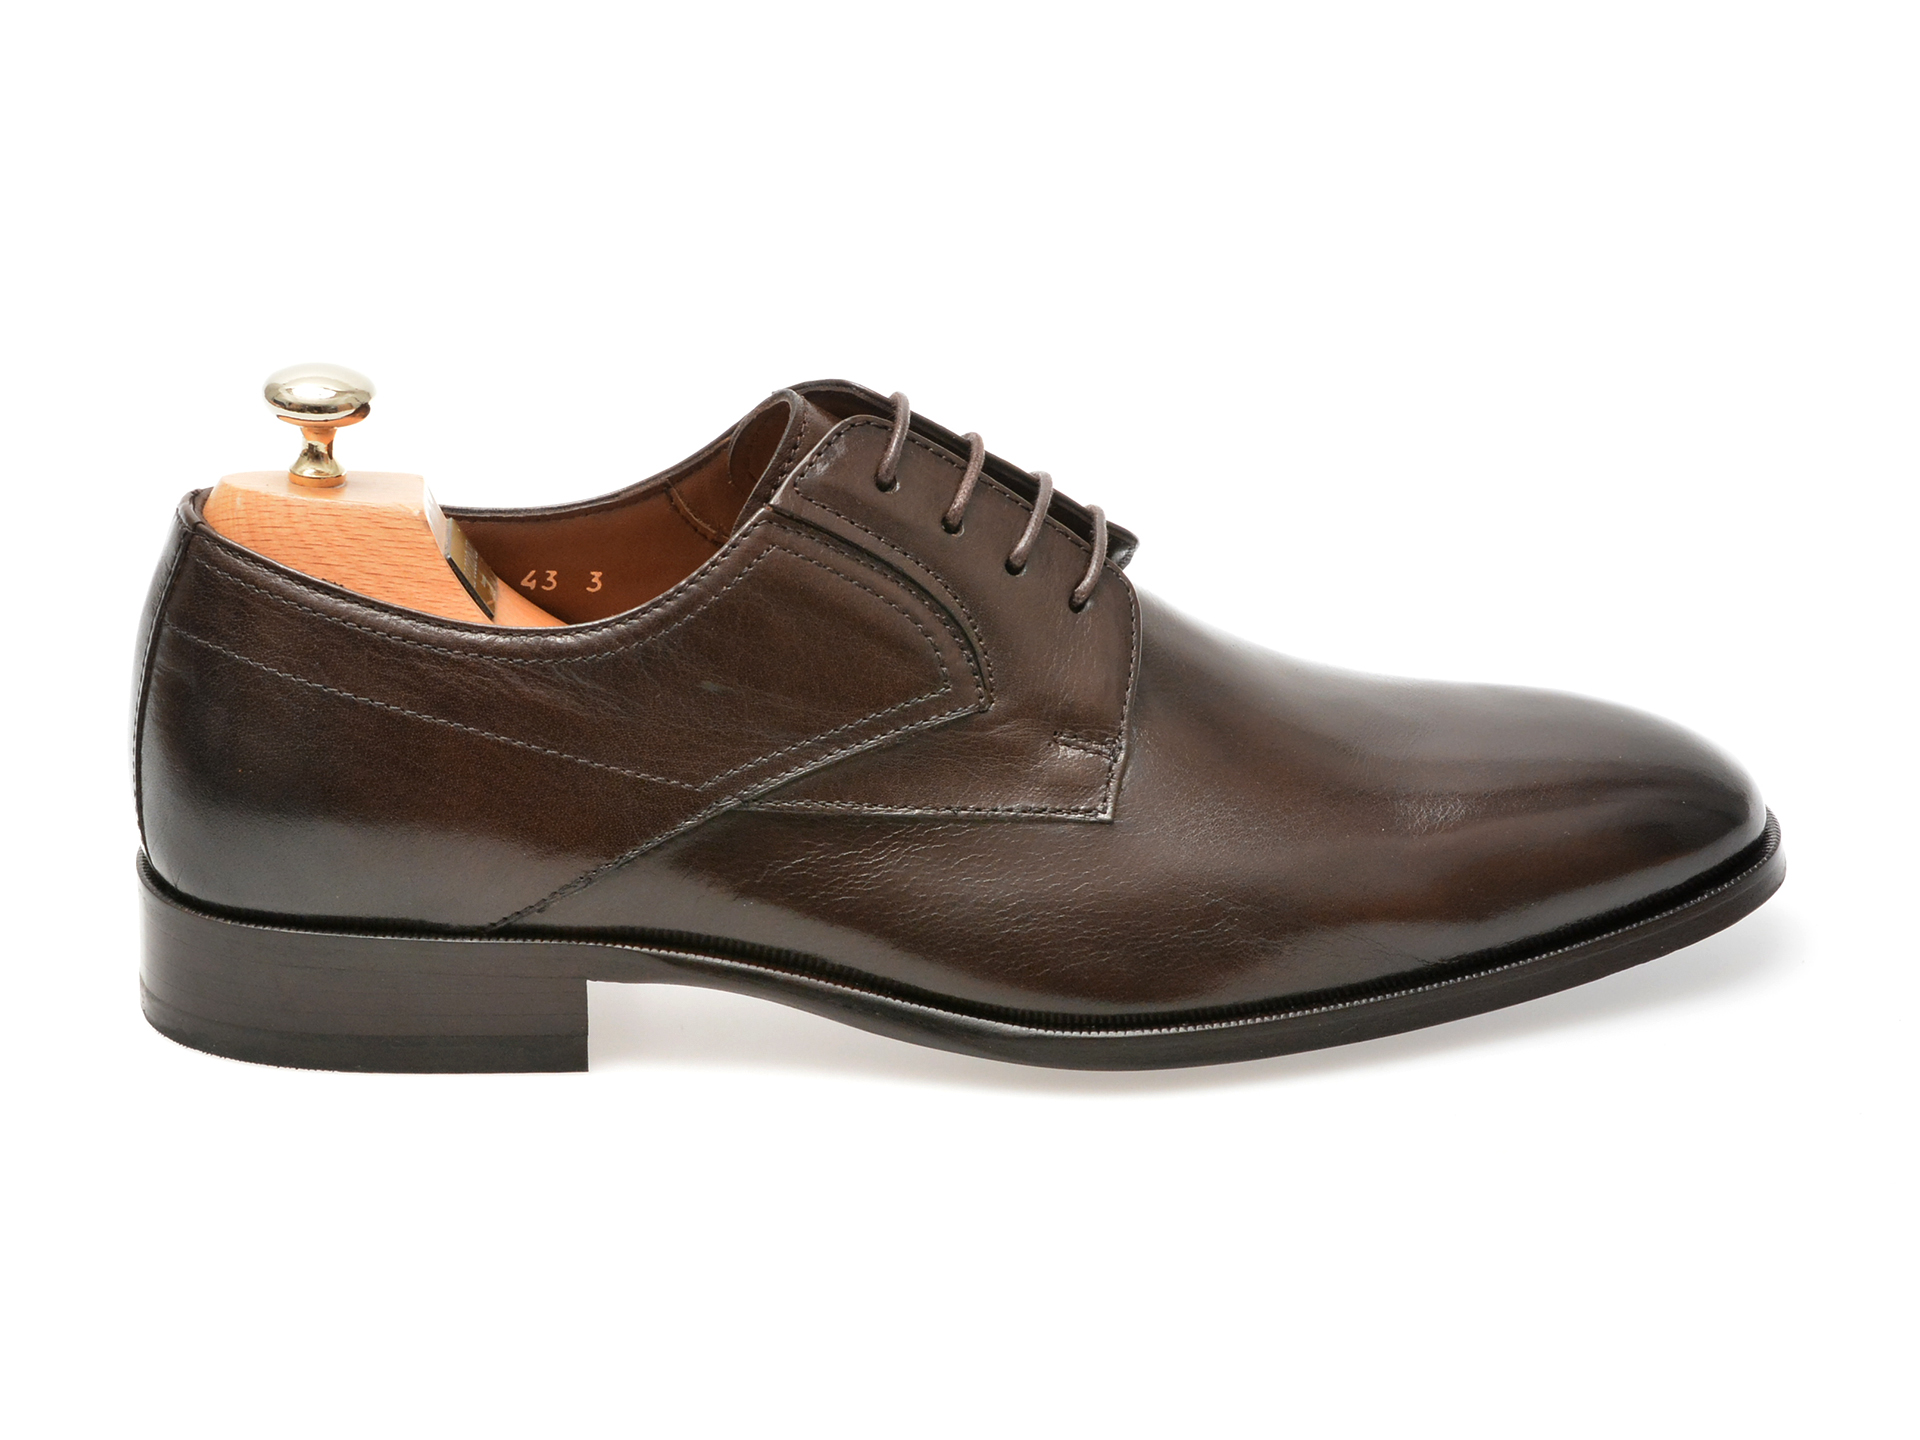 Pantofi eleganti LE COLONEL maro, 484911, din piele naturala